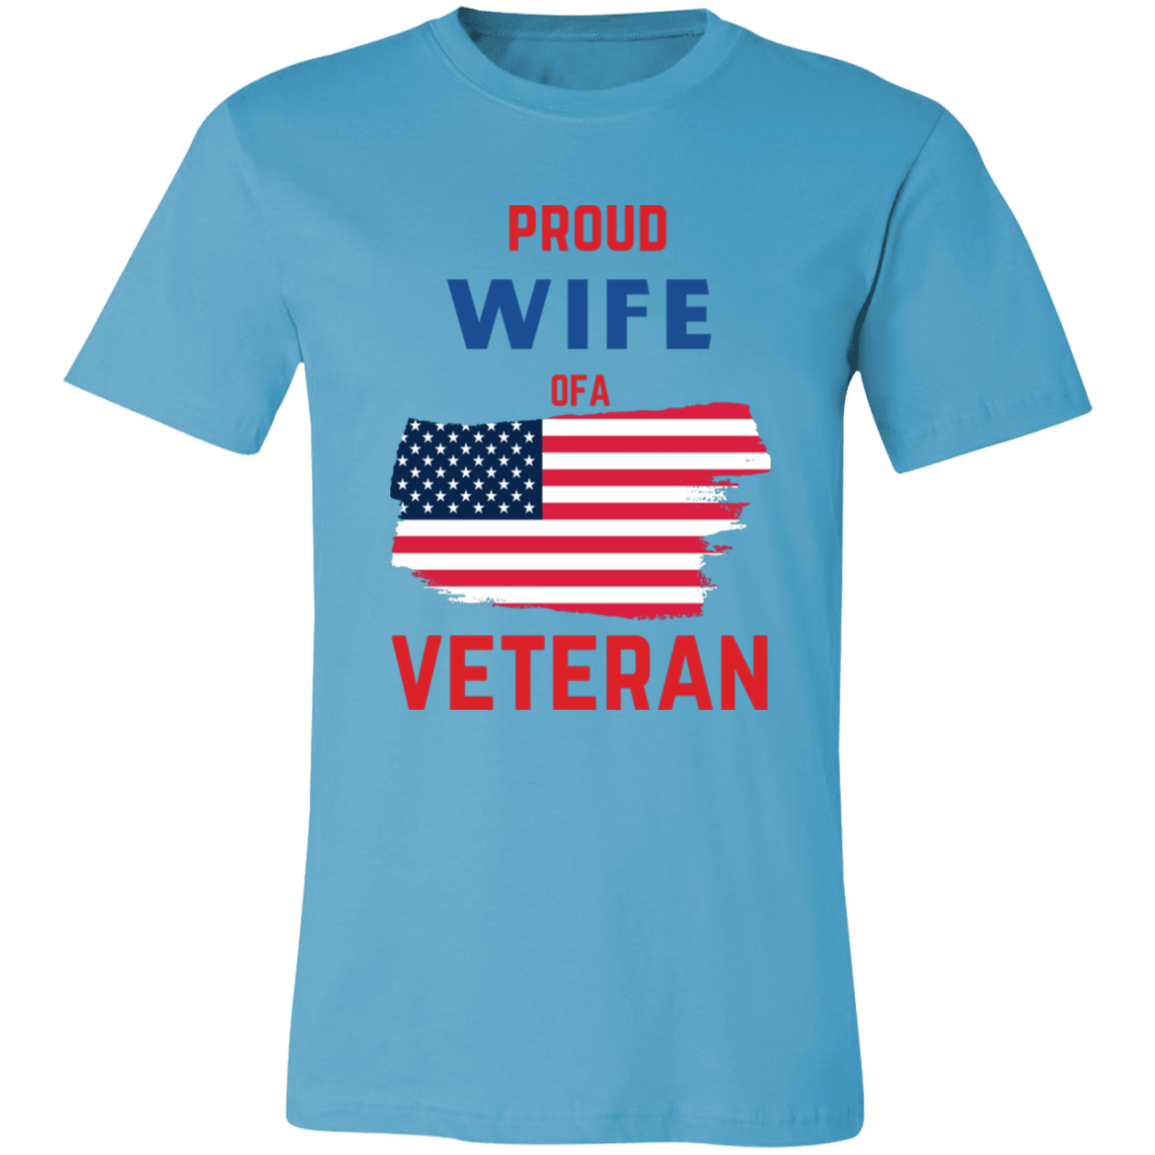 I am a Proud Wife of a Veteran